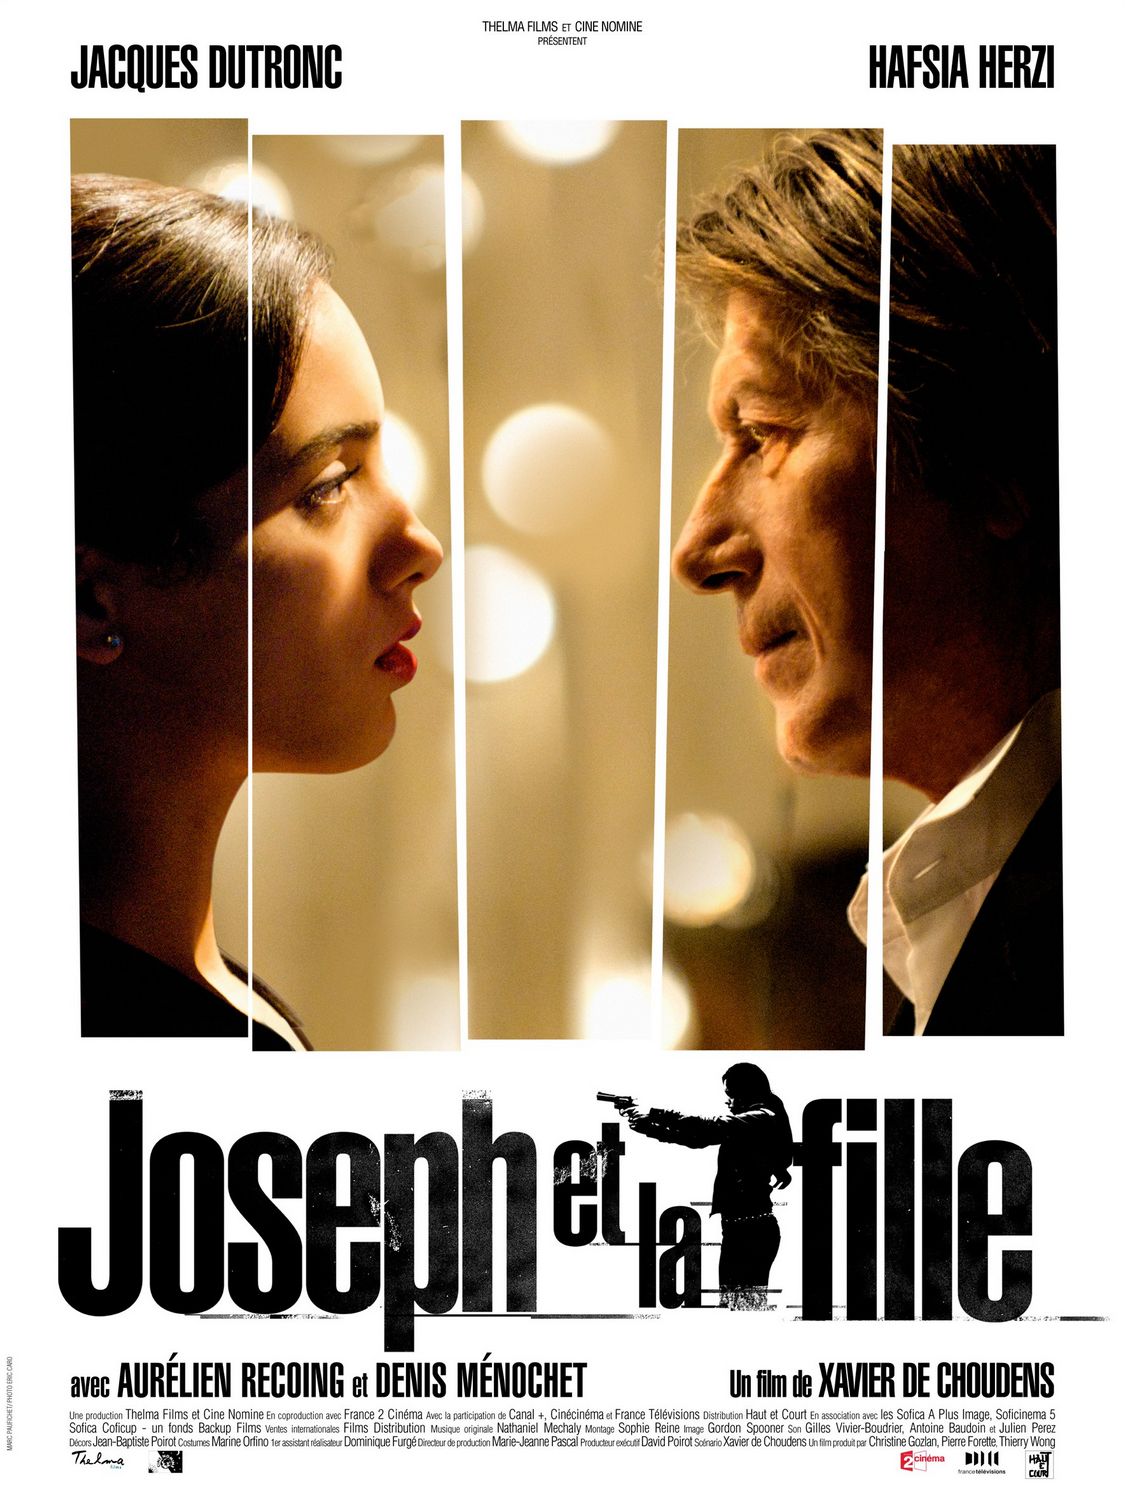 Extra Large Movie Poster Image for Joseph et la fille 